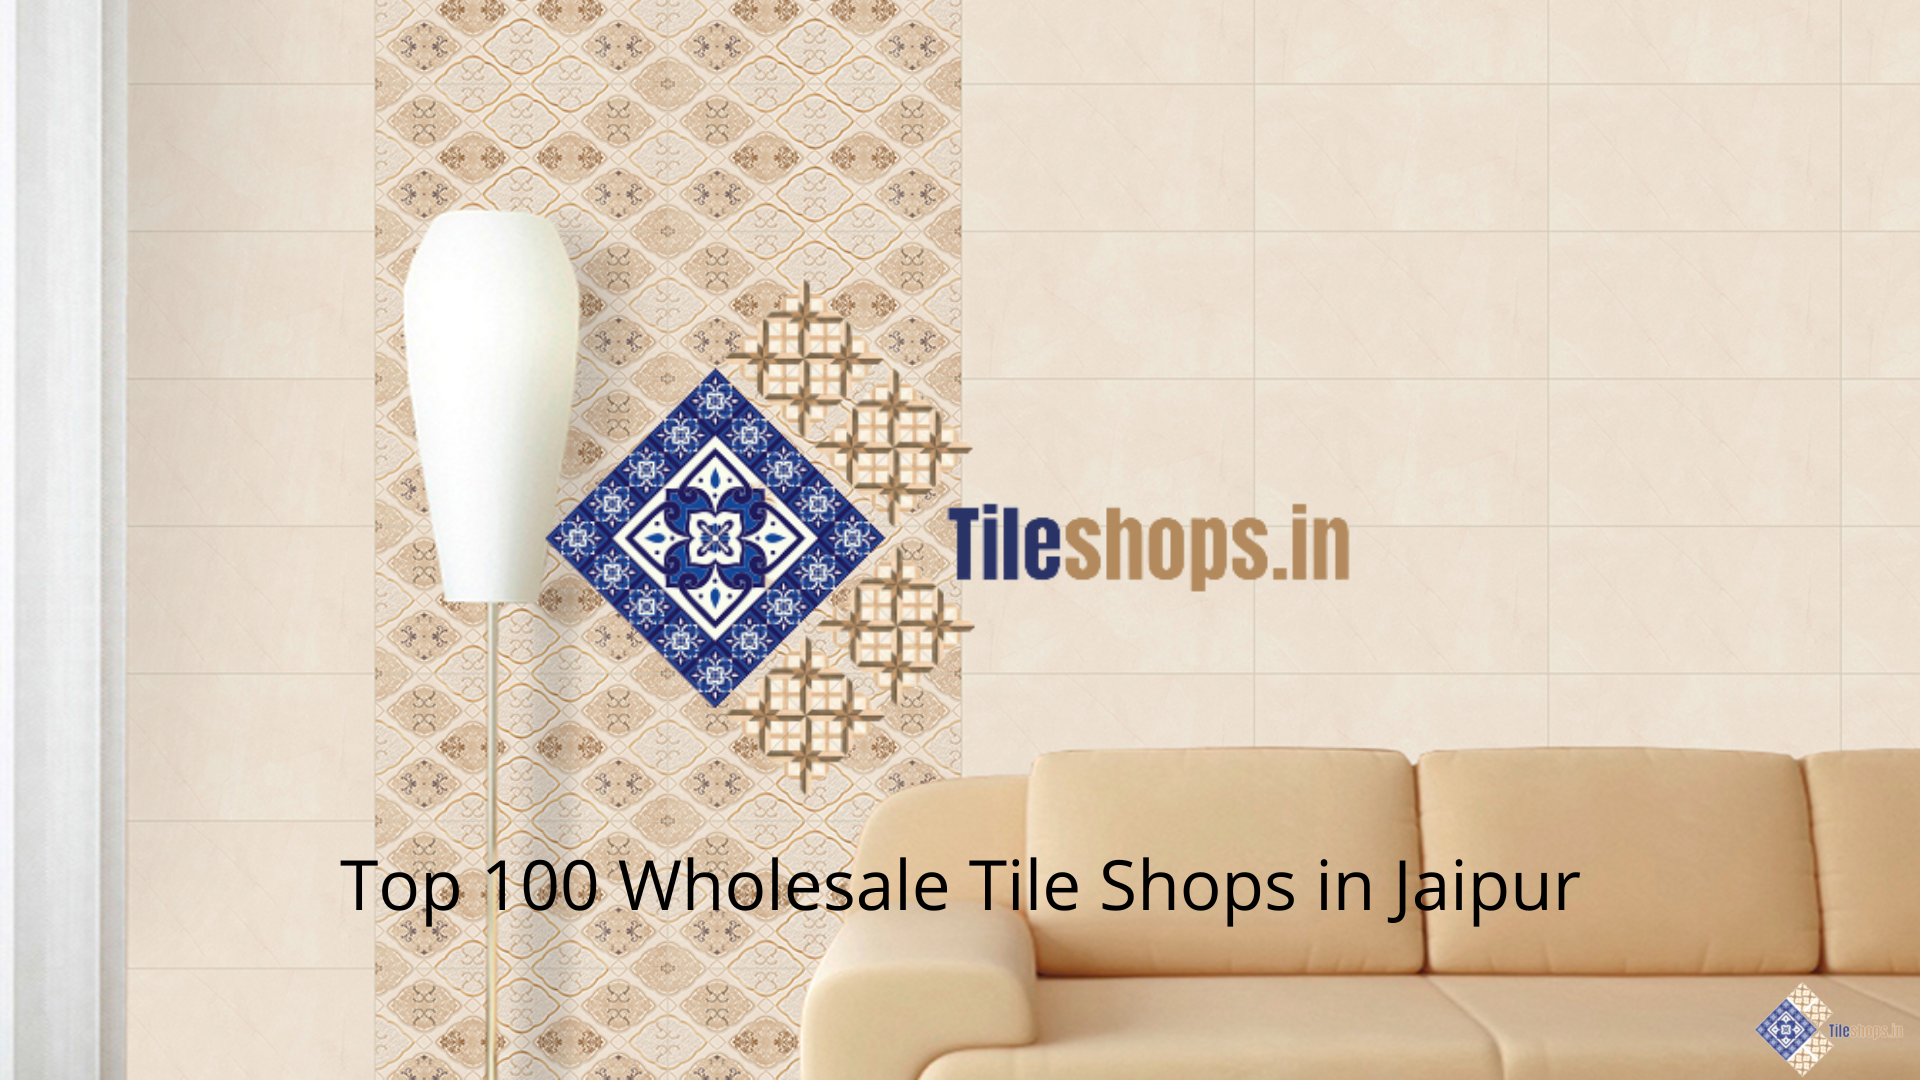 Top 100 Wholesale Tile Shops in Jaipur